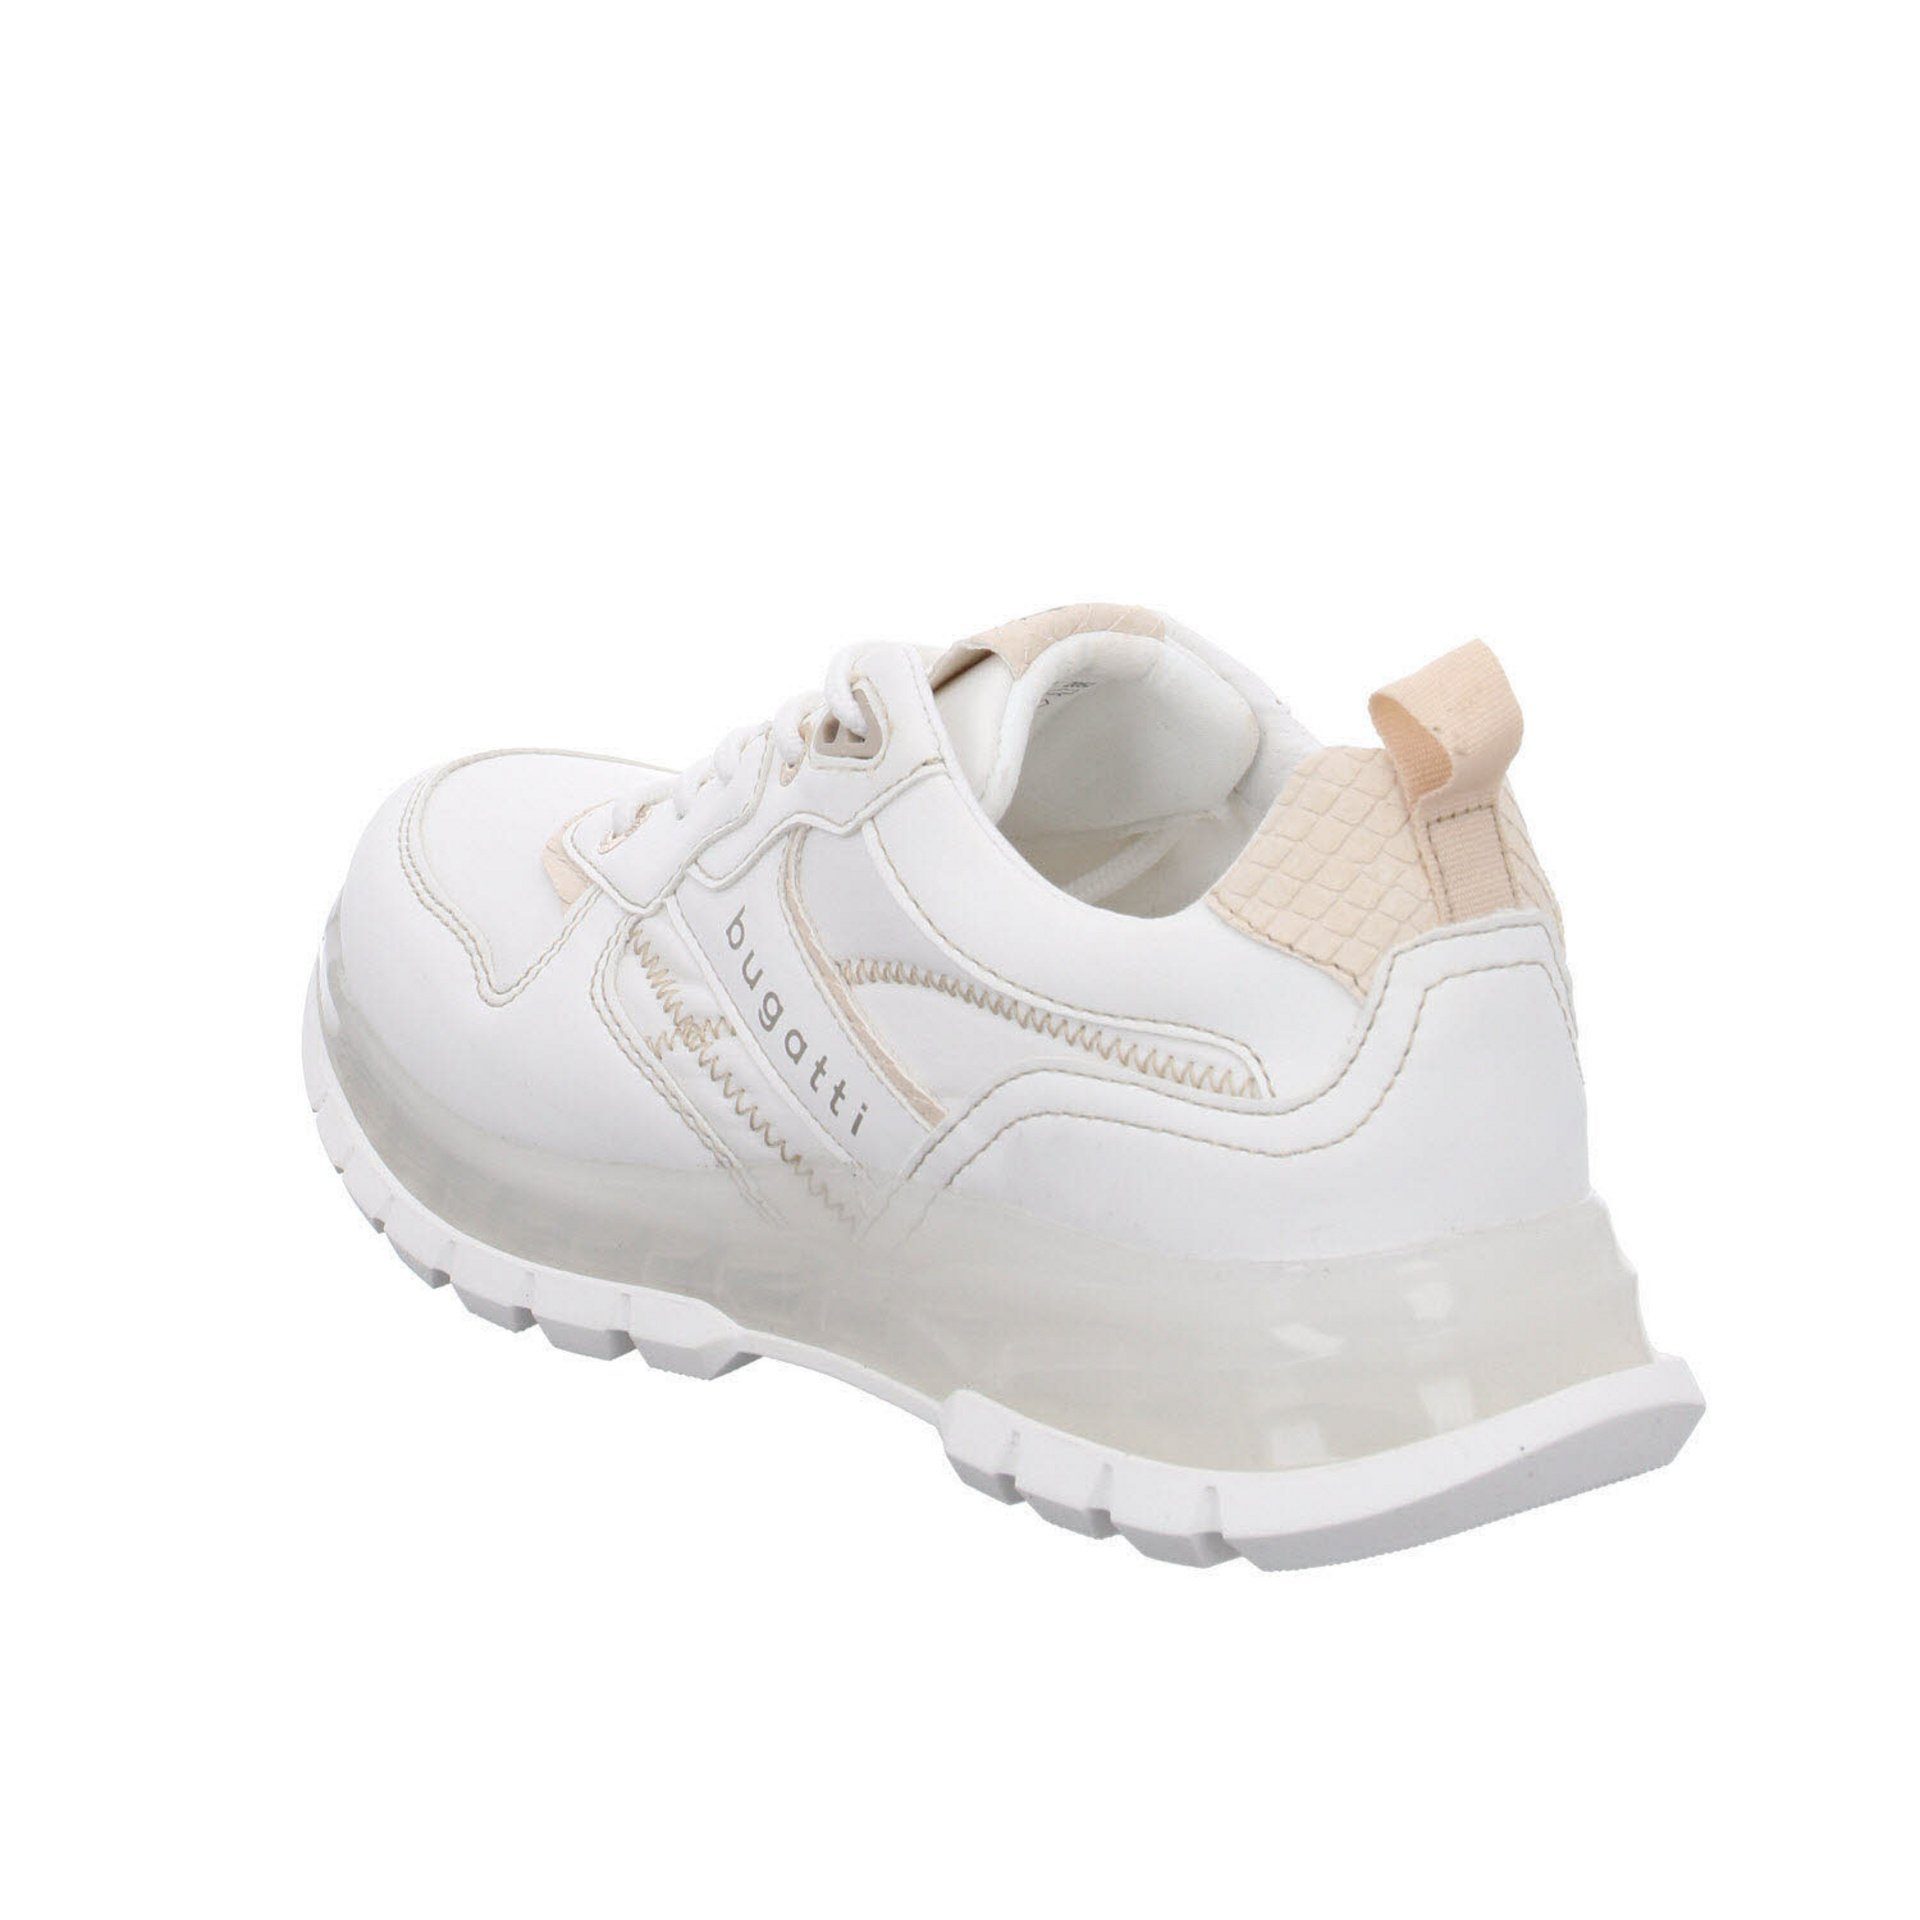 Schuhe Leder-/Textilkombination Schnürschuh Athena Damen Sneaker bugatti Sneaker